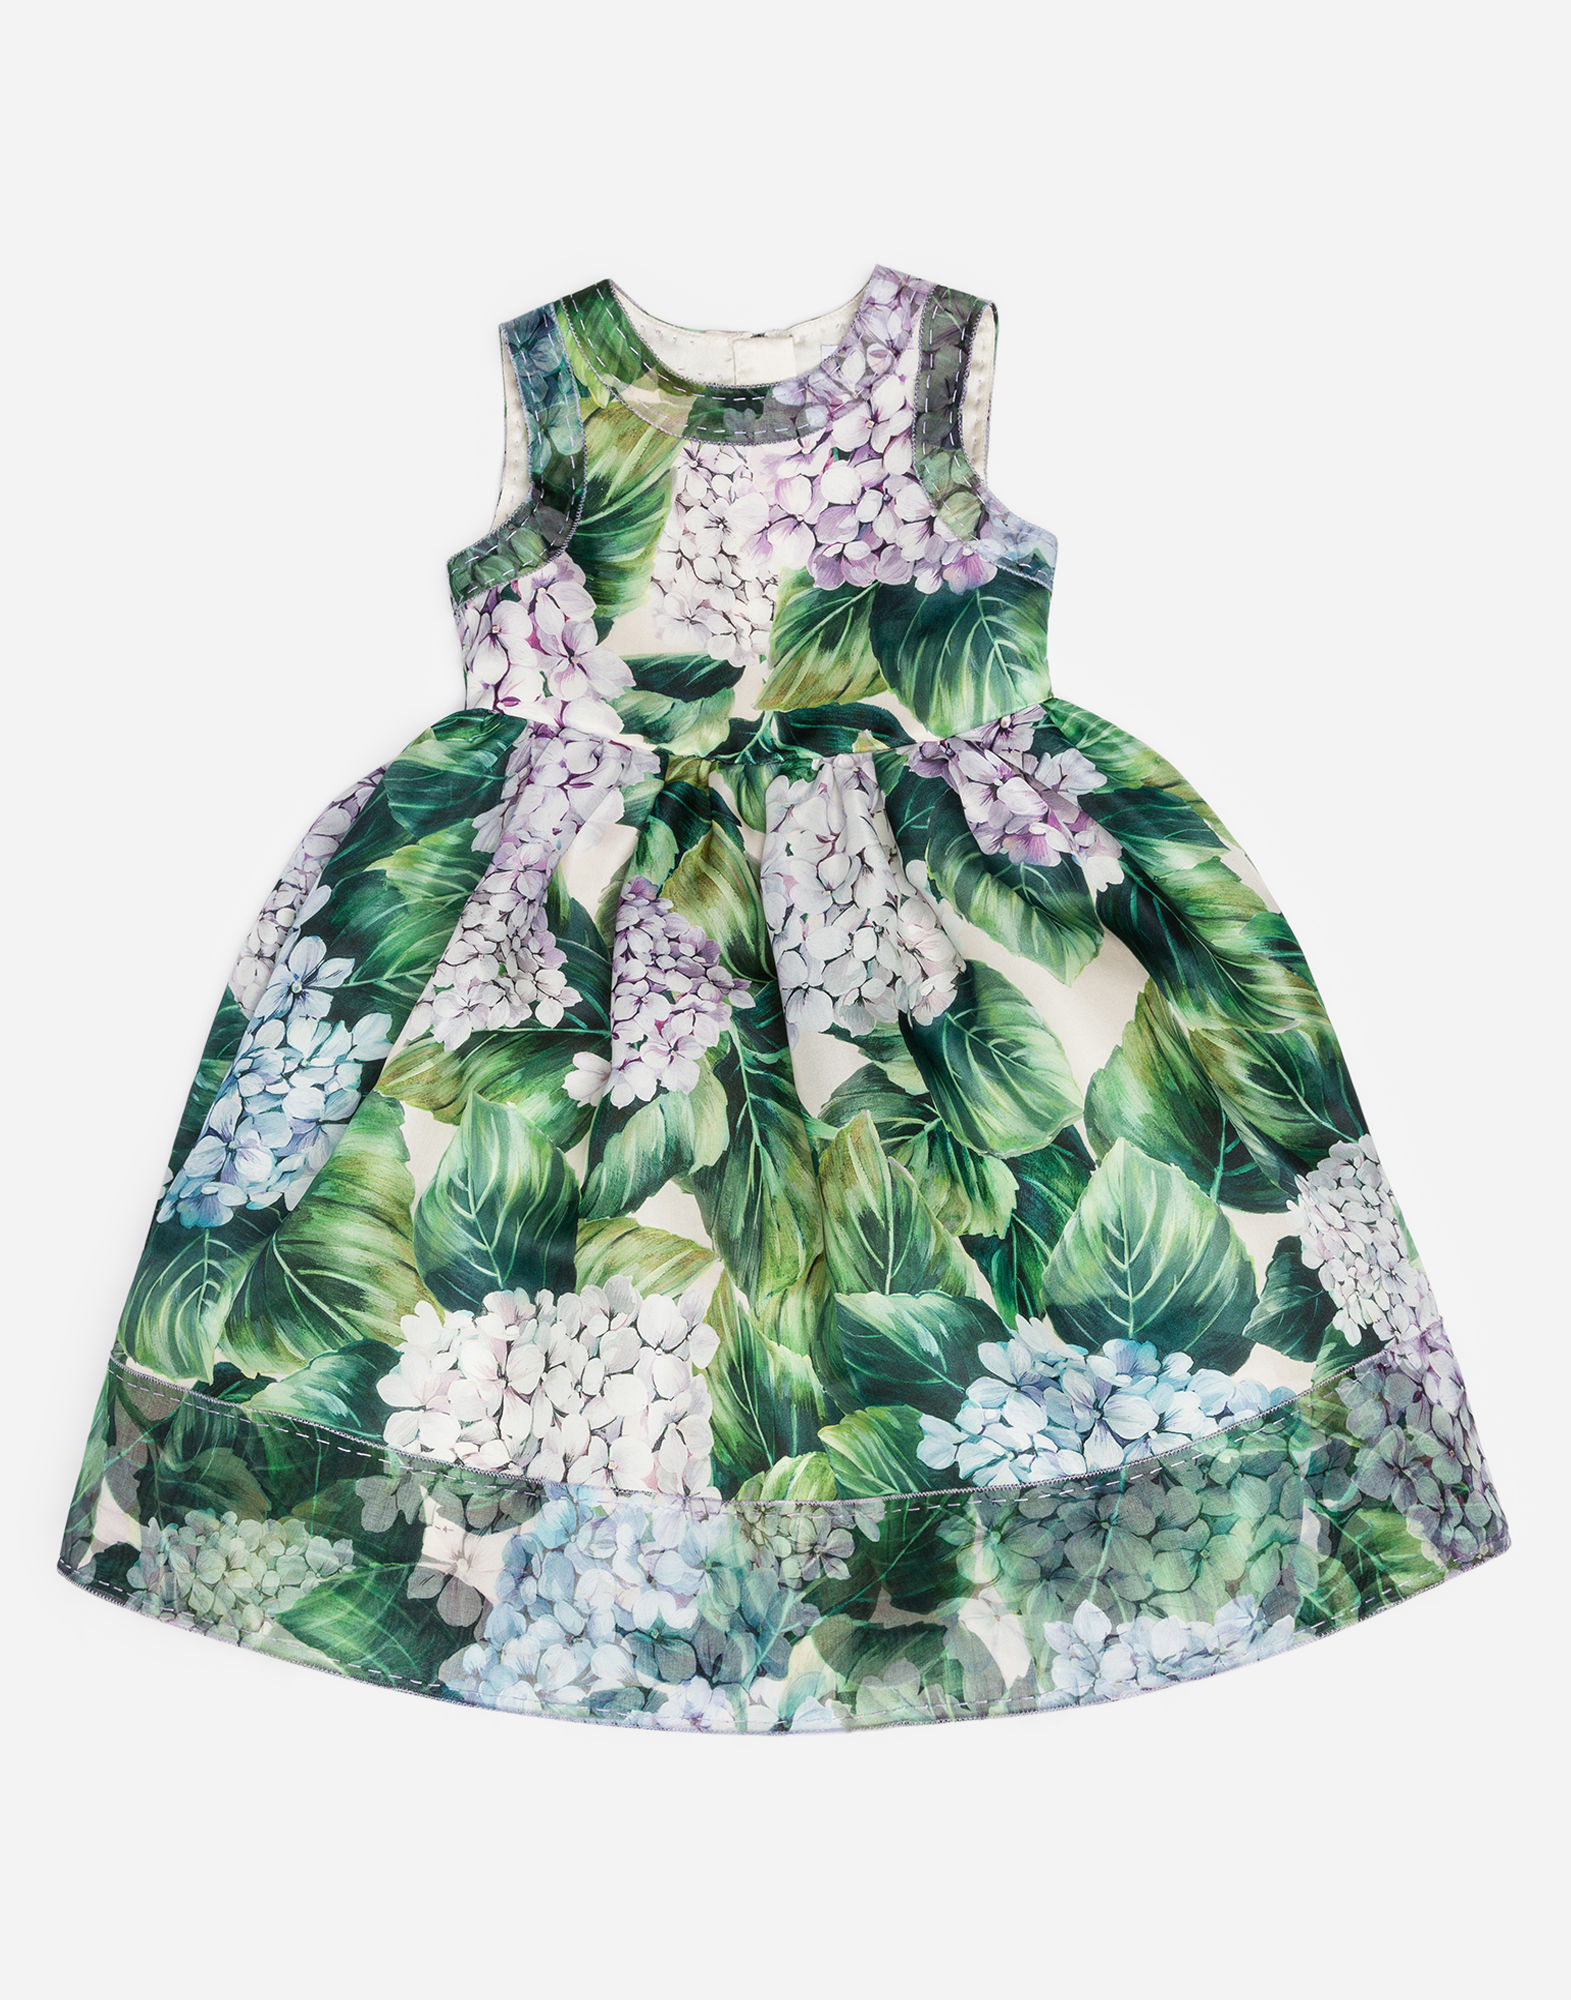 Dolce & Gabbana Printed Silk Dress In マルチカラー | ModeSens